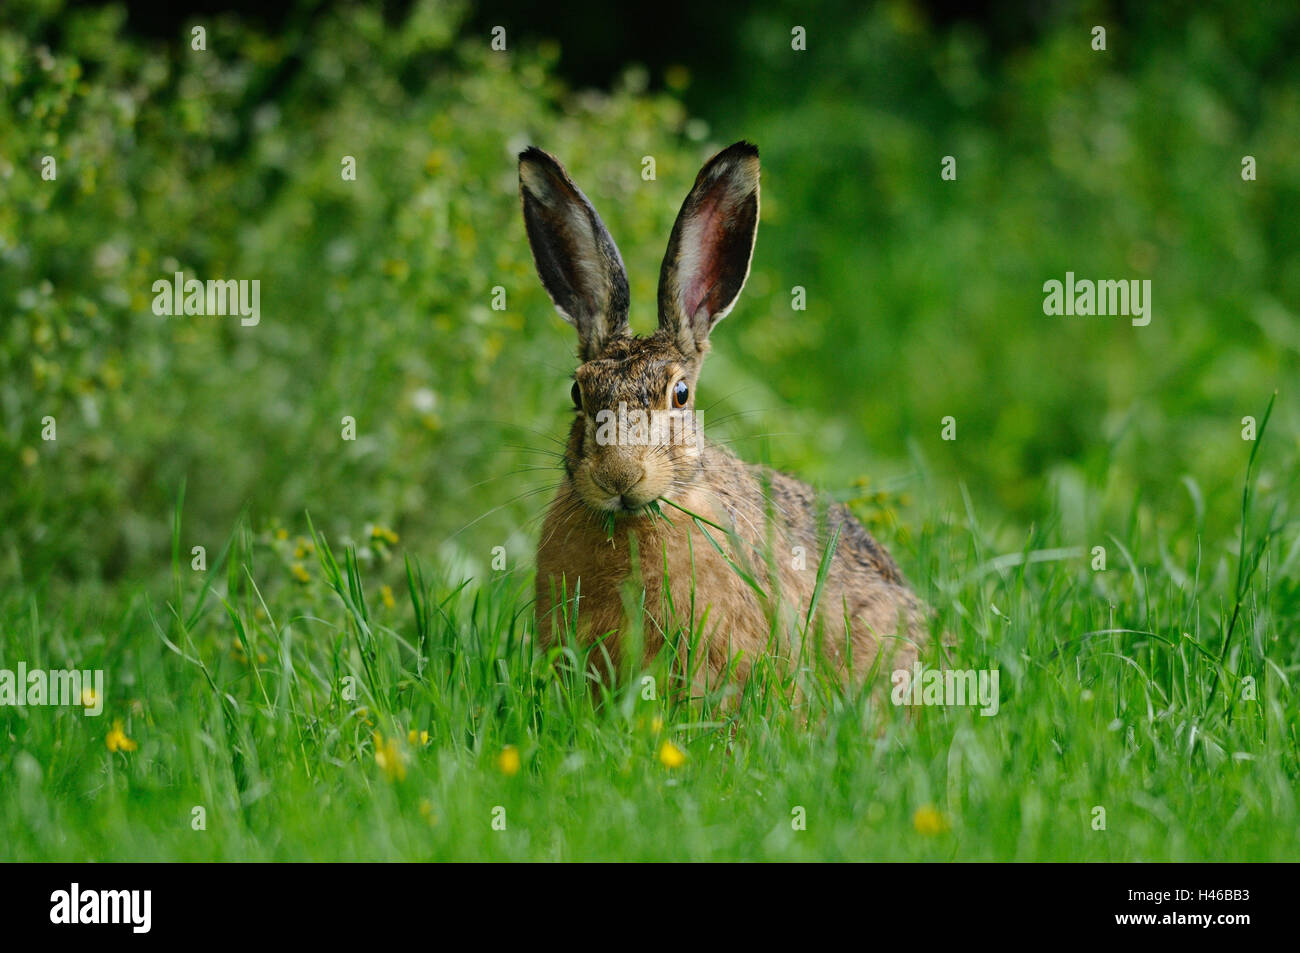 European hare, Lepus europaeus, grass, sitting, eating, front view, Stock Photo